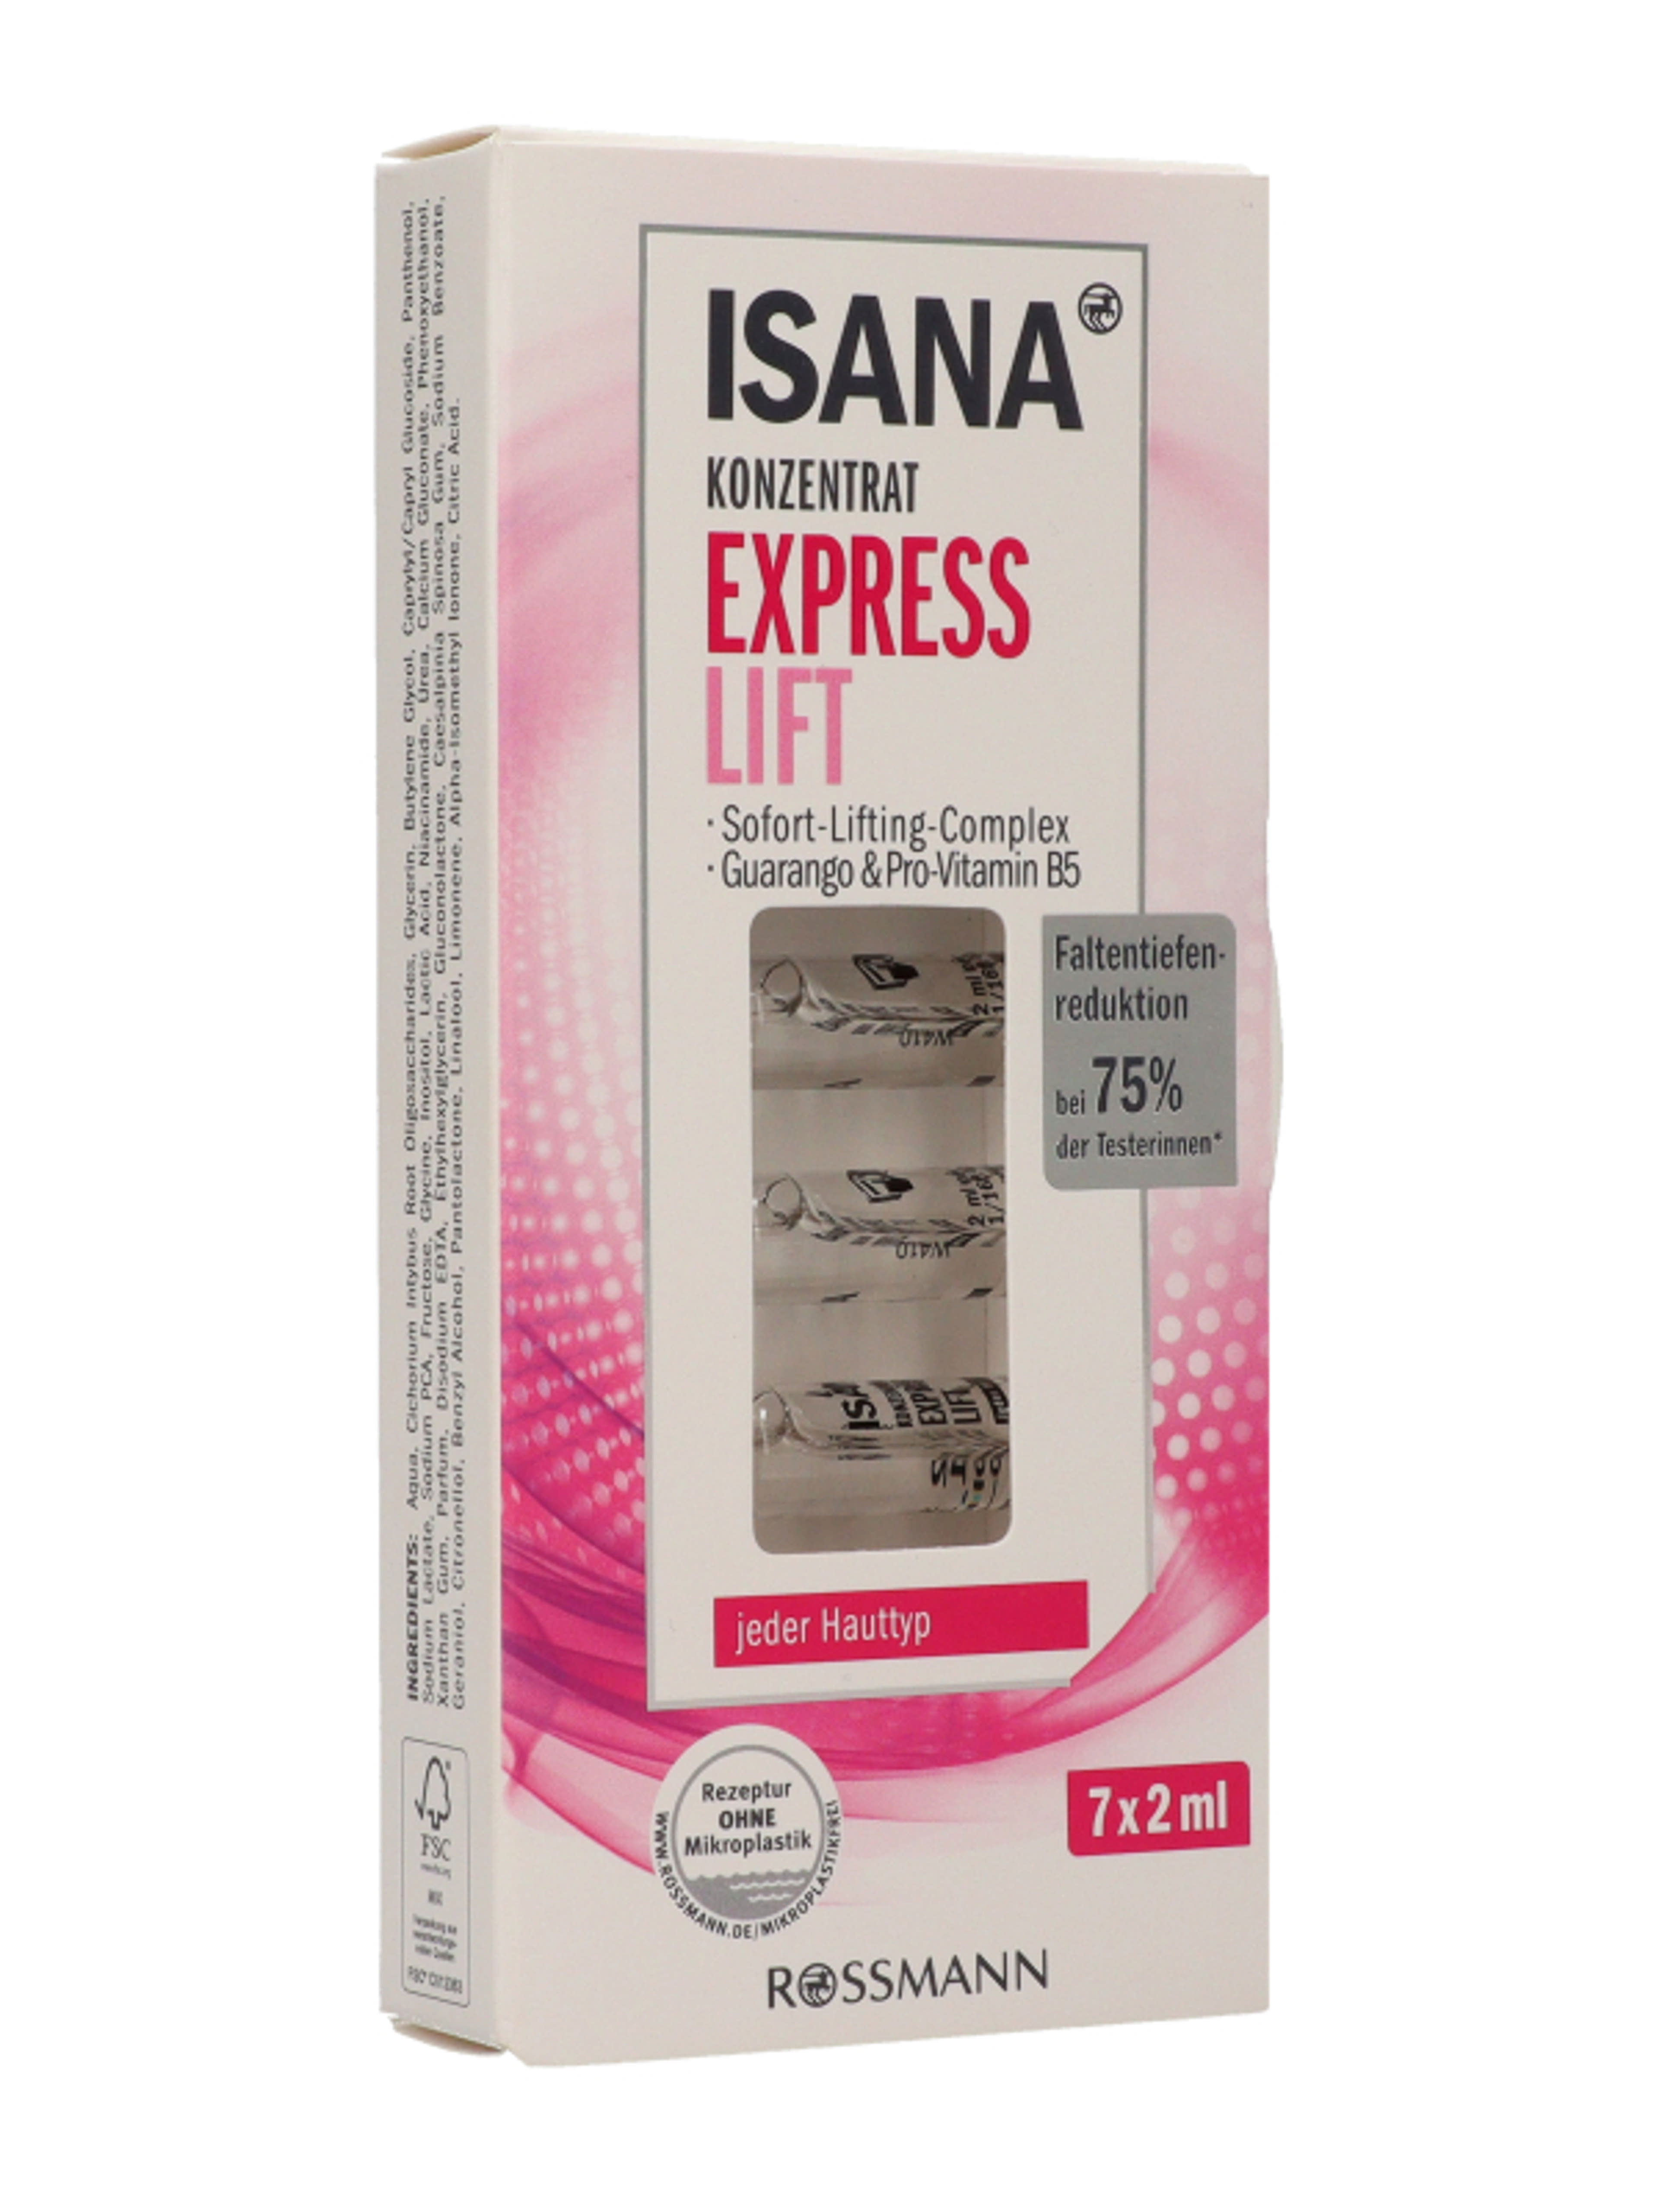 Isana express lift koncentrátum ampulla 7 x 2 ml - 7 db-5